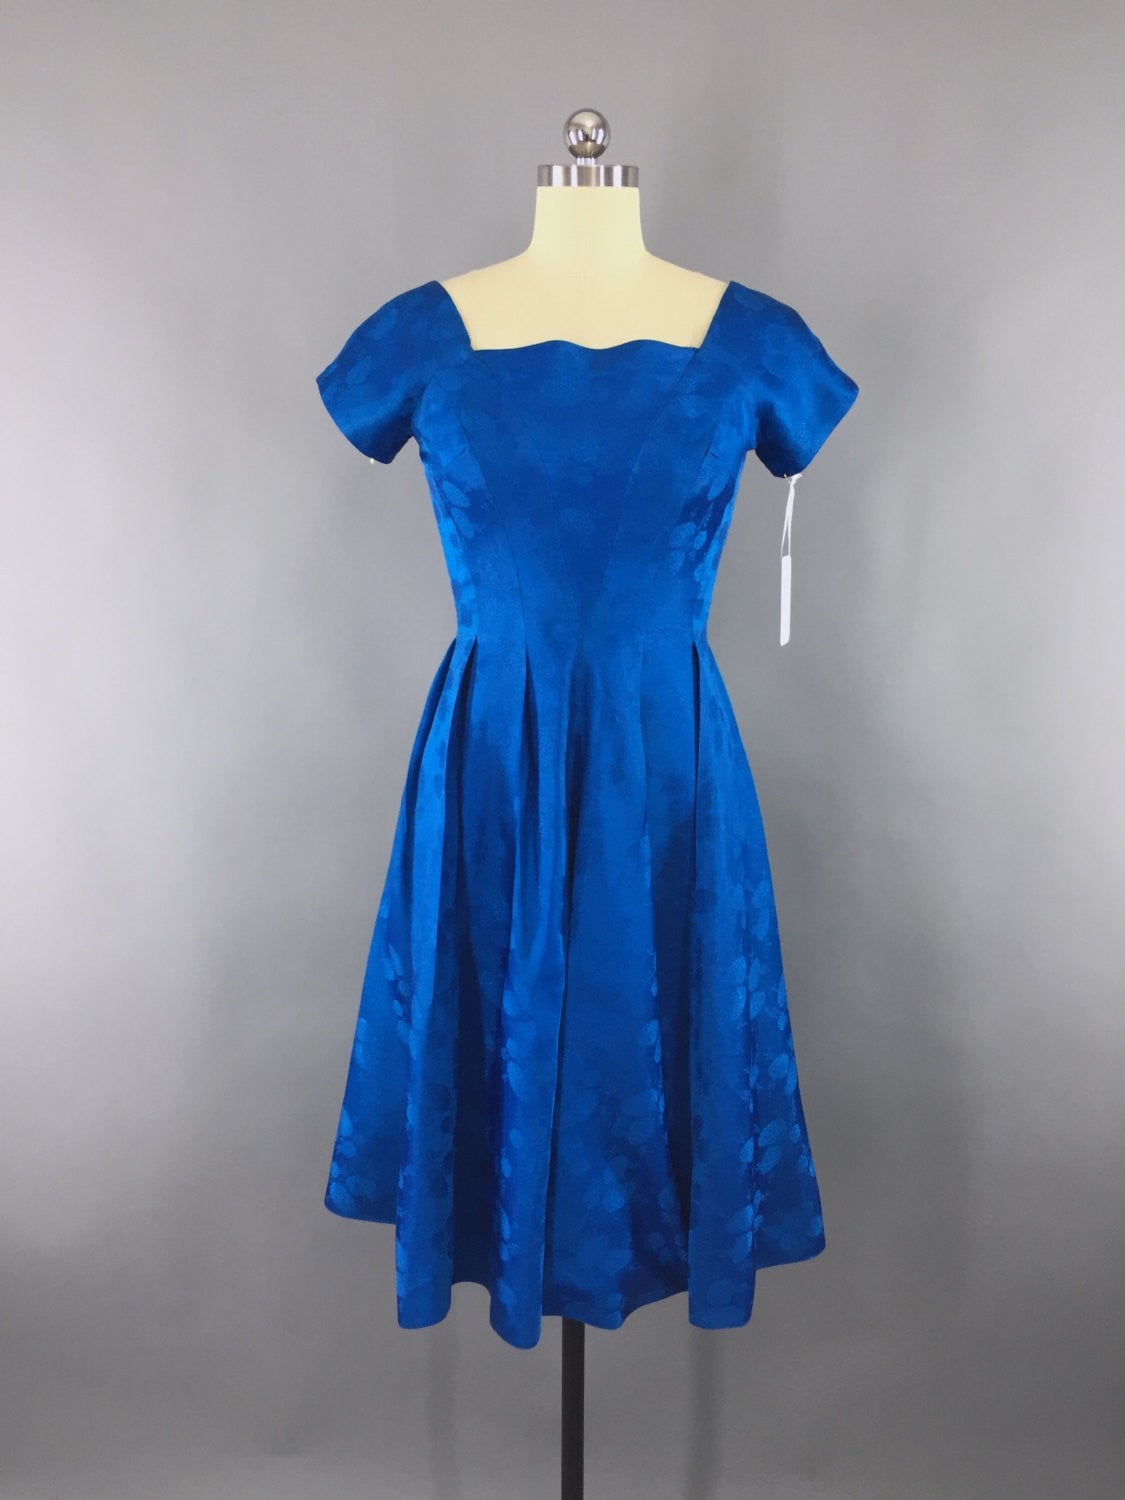 1950s Vintage Electric Blue Satin Damask Party Dress